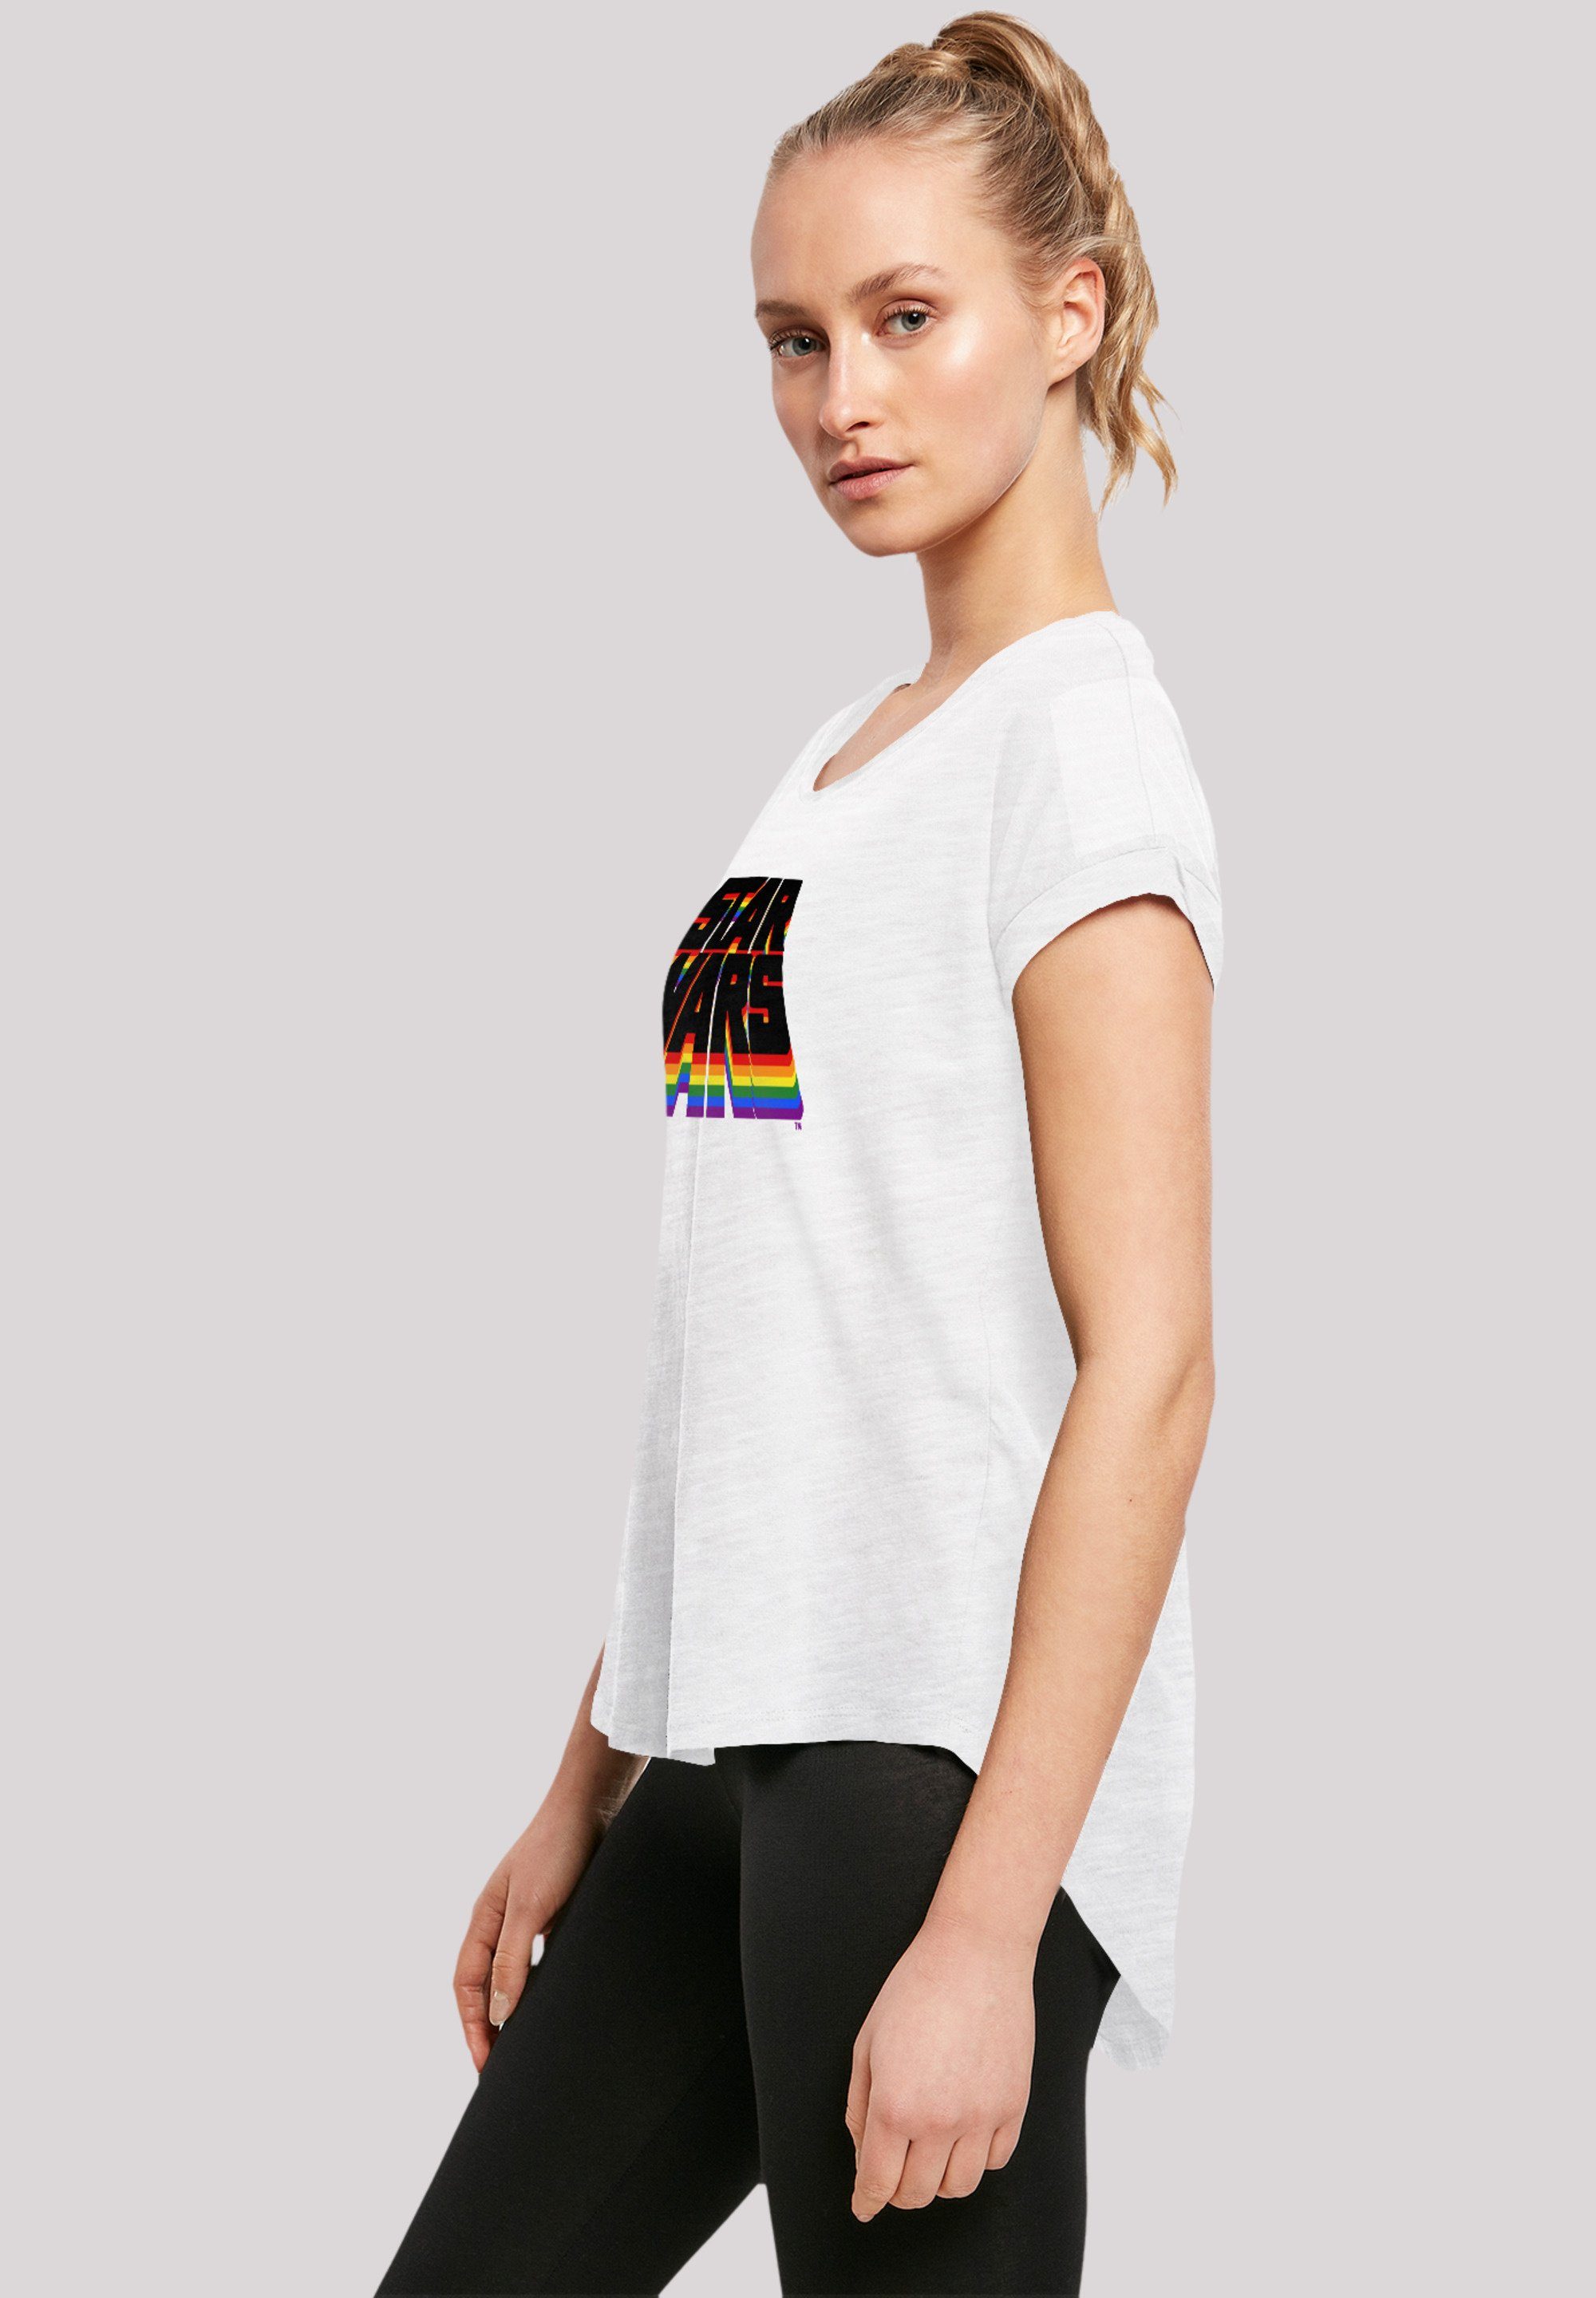 Vintage Pride Premium Qualität F4NT4STIC Star Wars T-Shirt